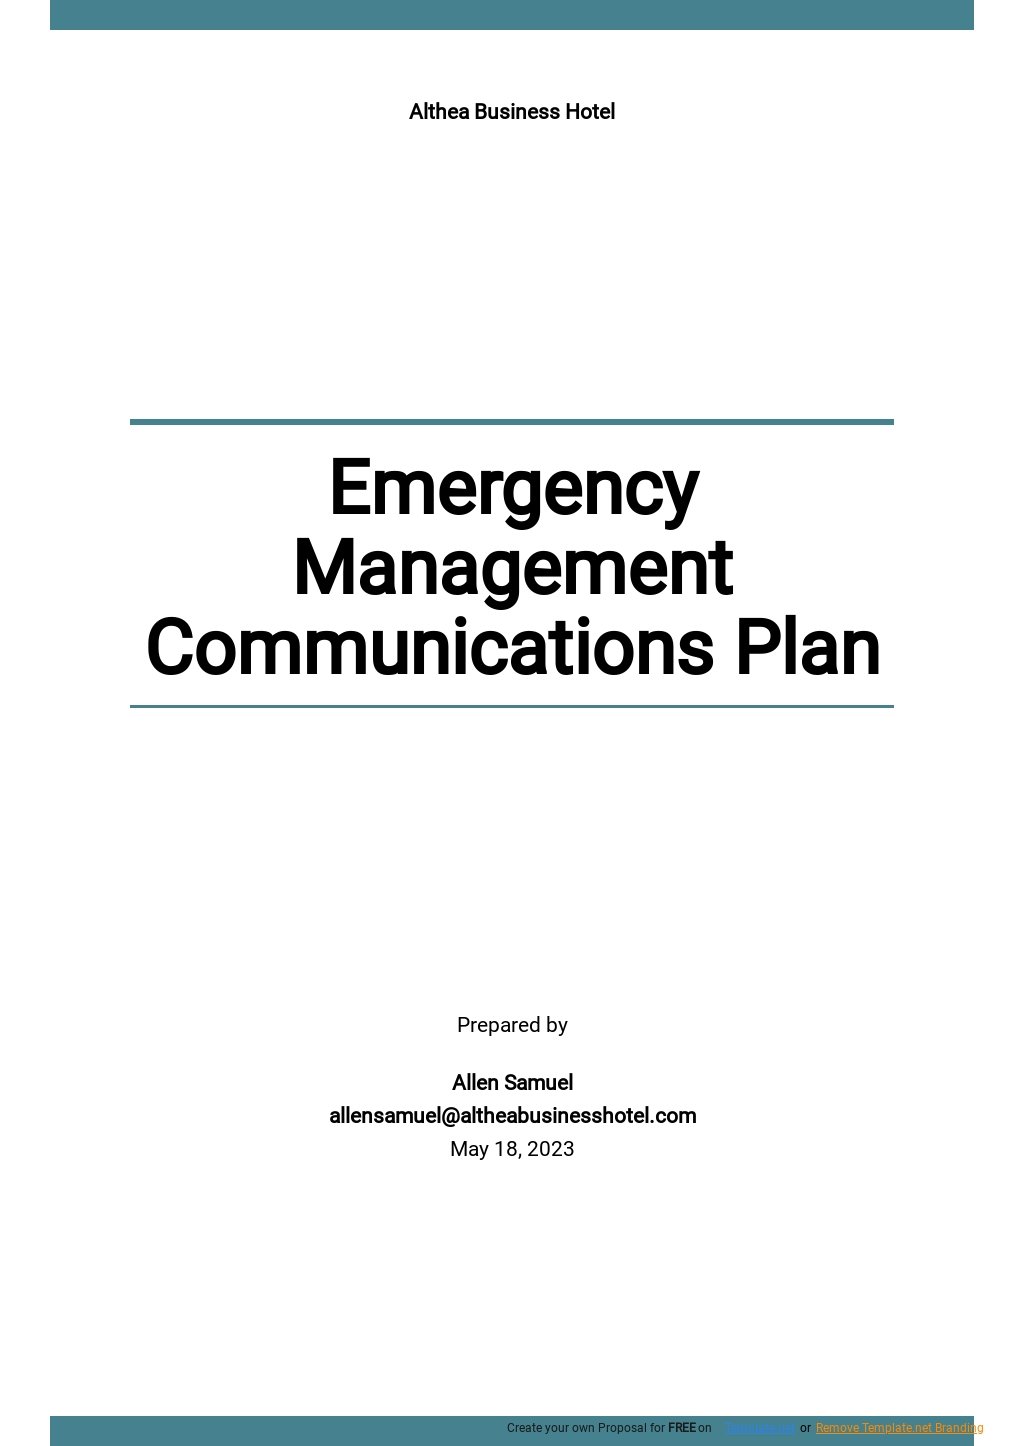 Emergency Management Communications Plan Template